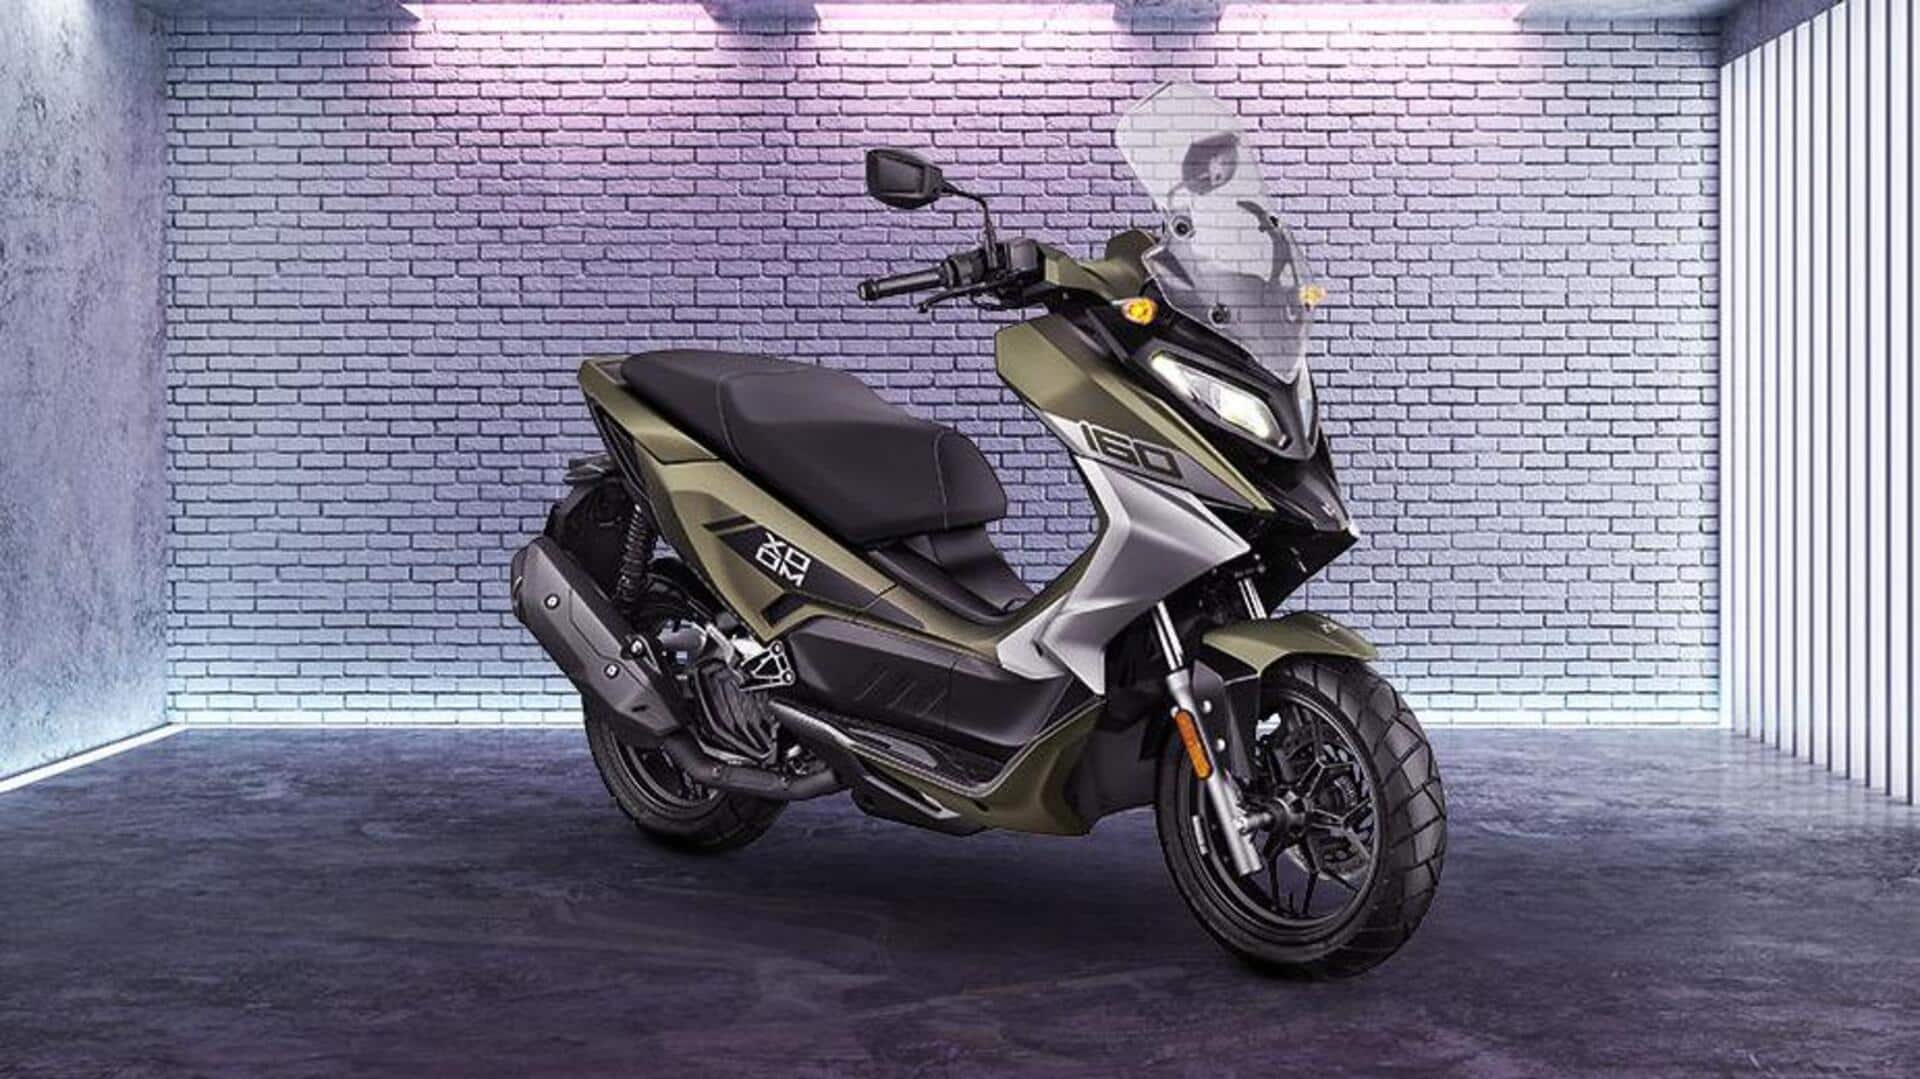 Hero MotoCorp may launch Xoom 160 adventure scooter tomorrow